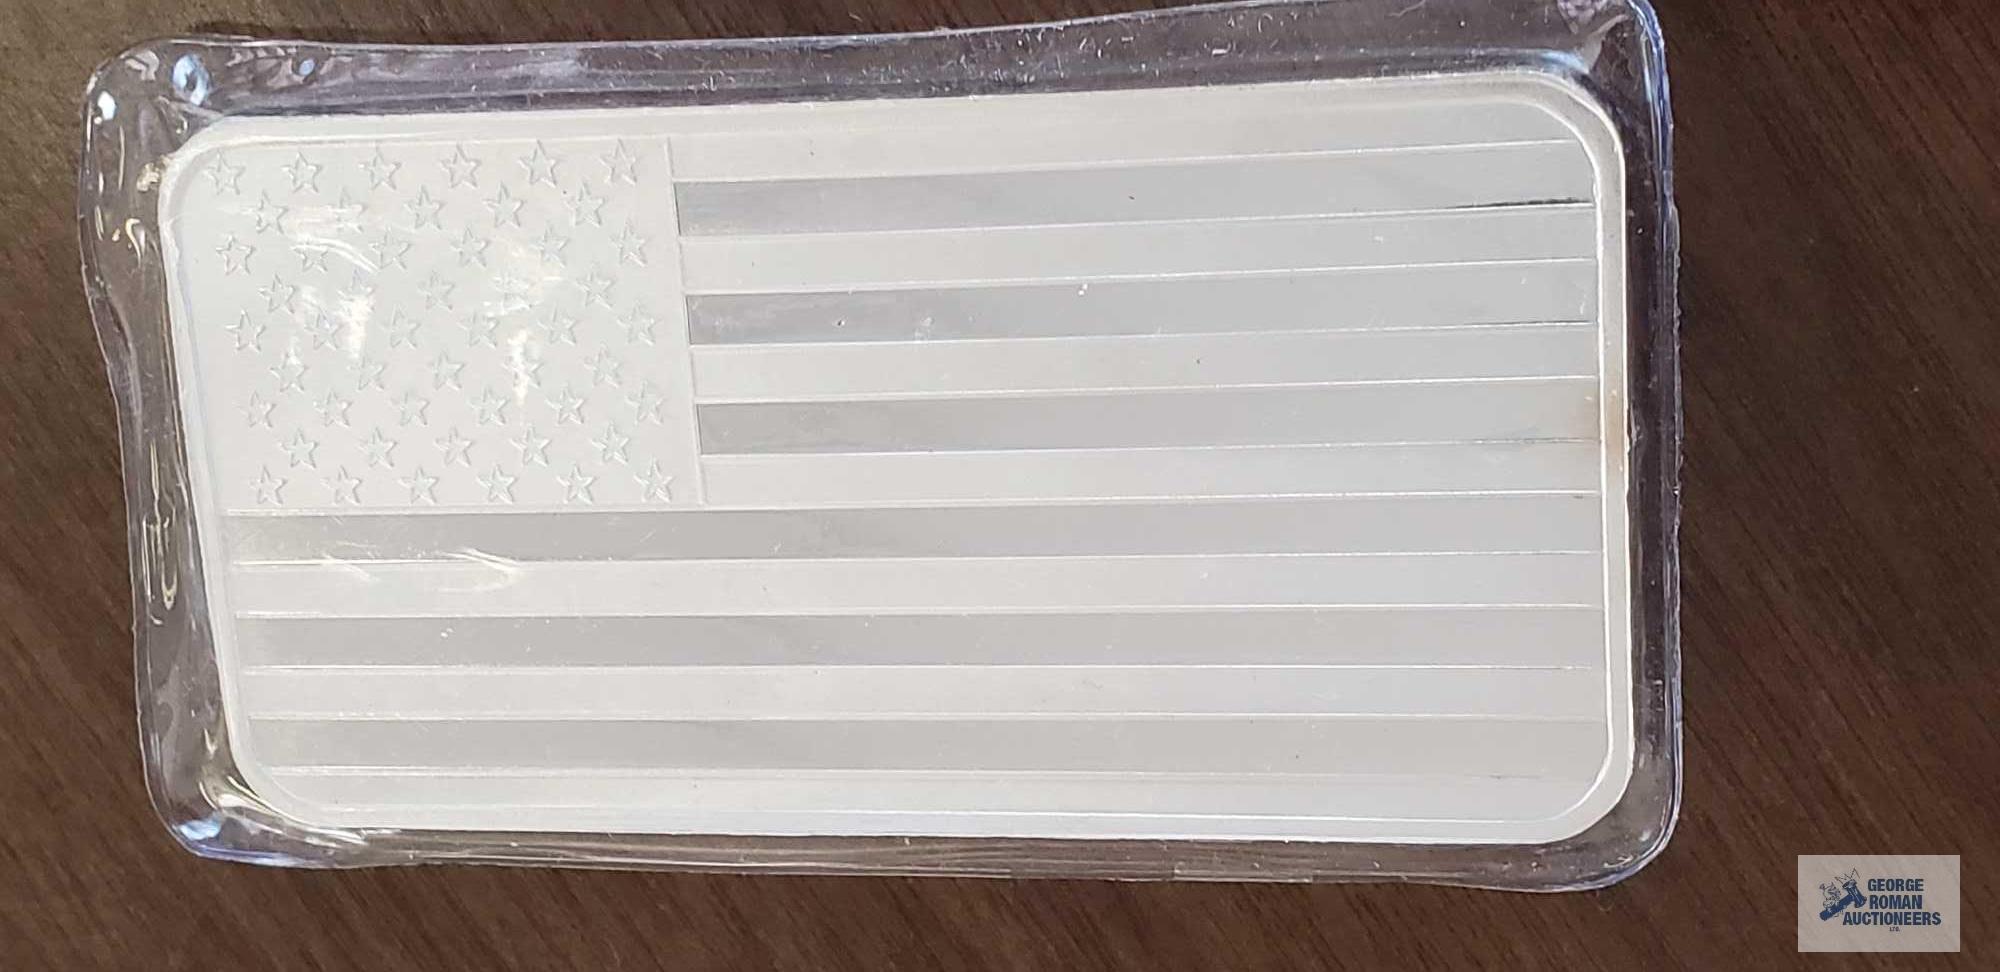 American flag .999 fine silver 10 troy ounces bars Quantity 4